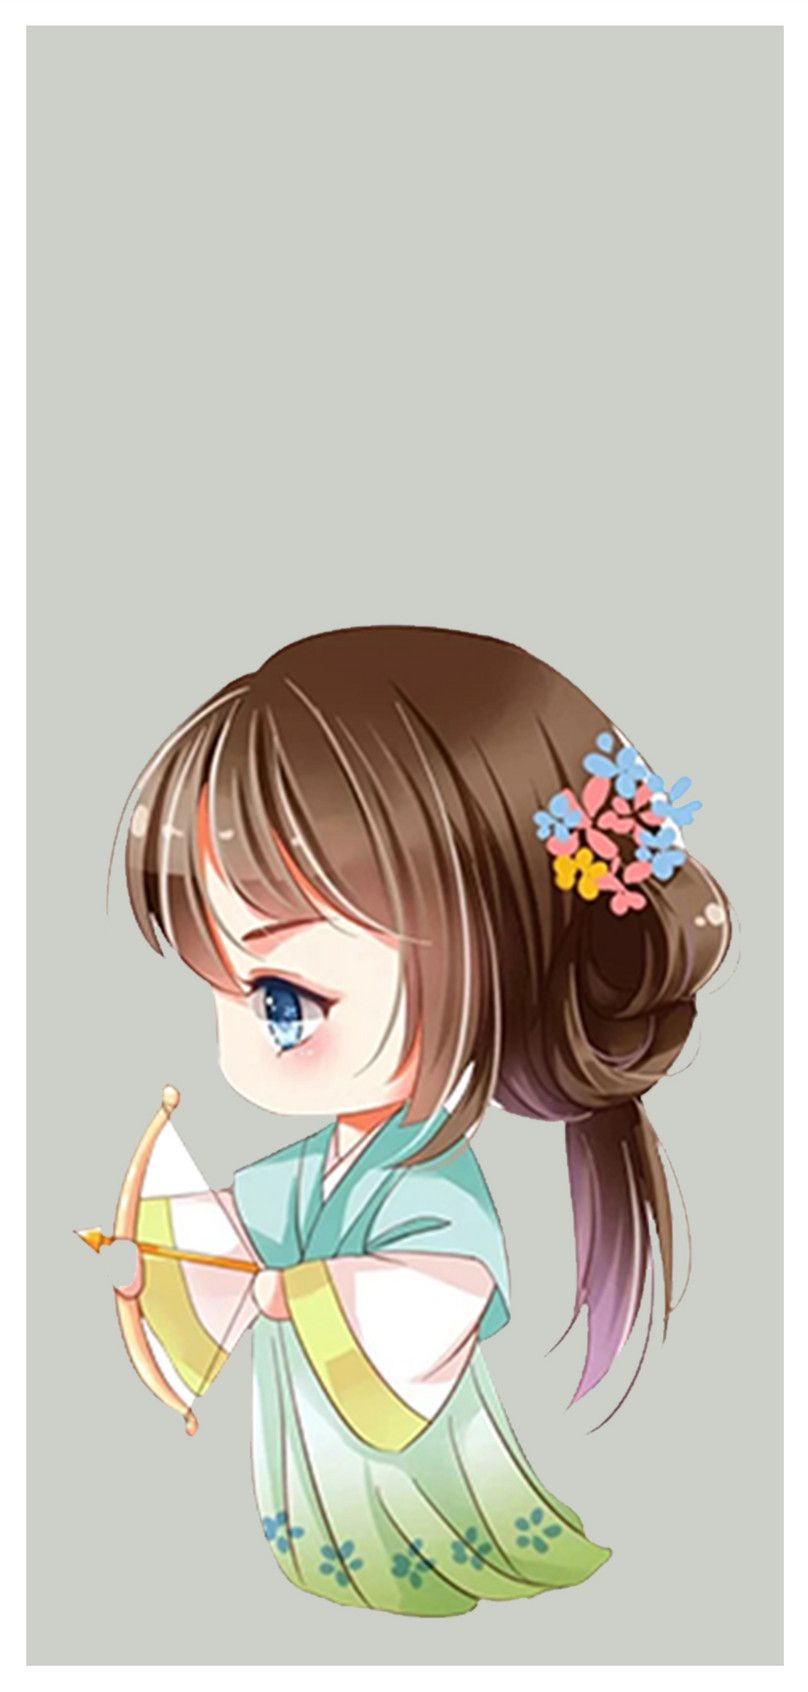 cartoon cute girl mobile wallpaper background image free